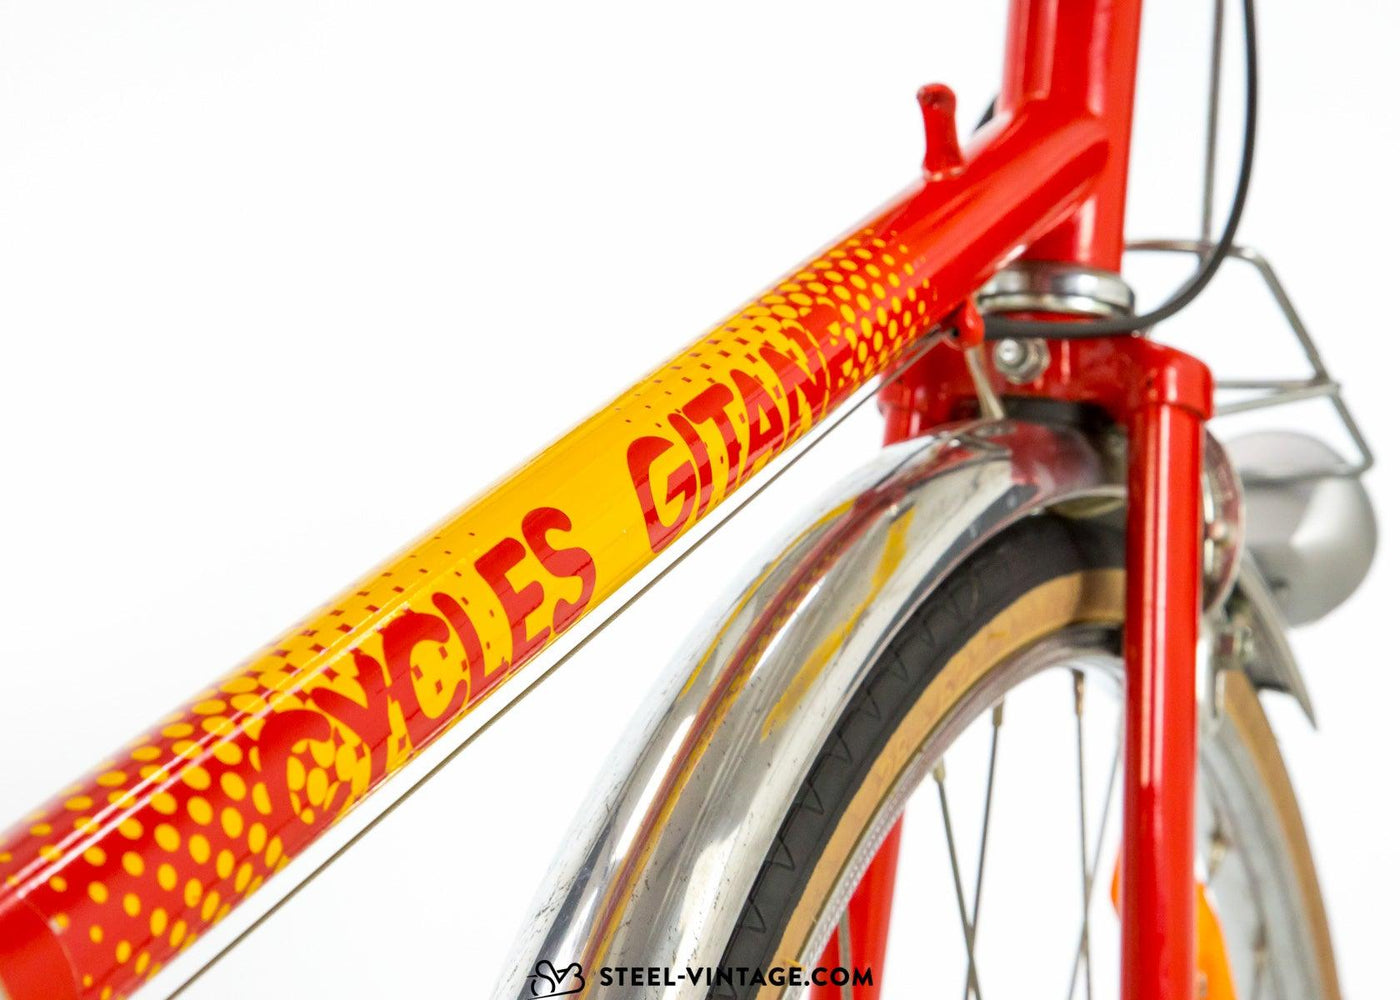 Gitane Espace Classic Ladies Bike 1986 - Steel Vintage Bikes